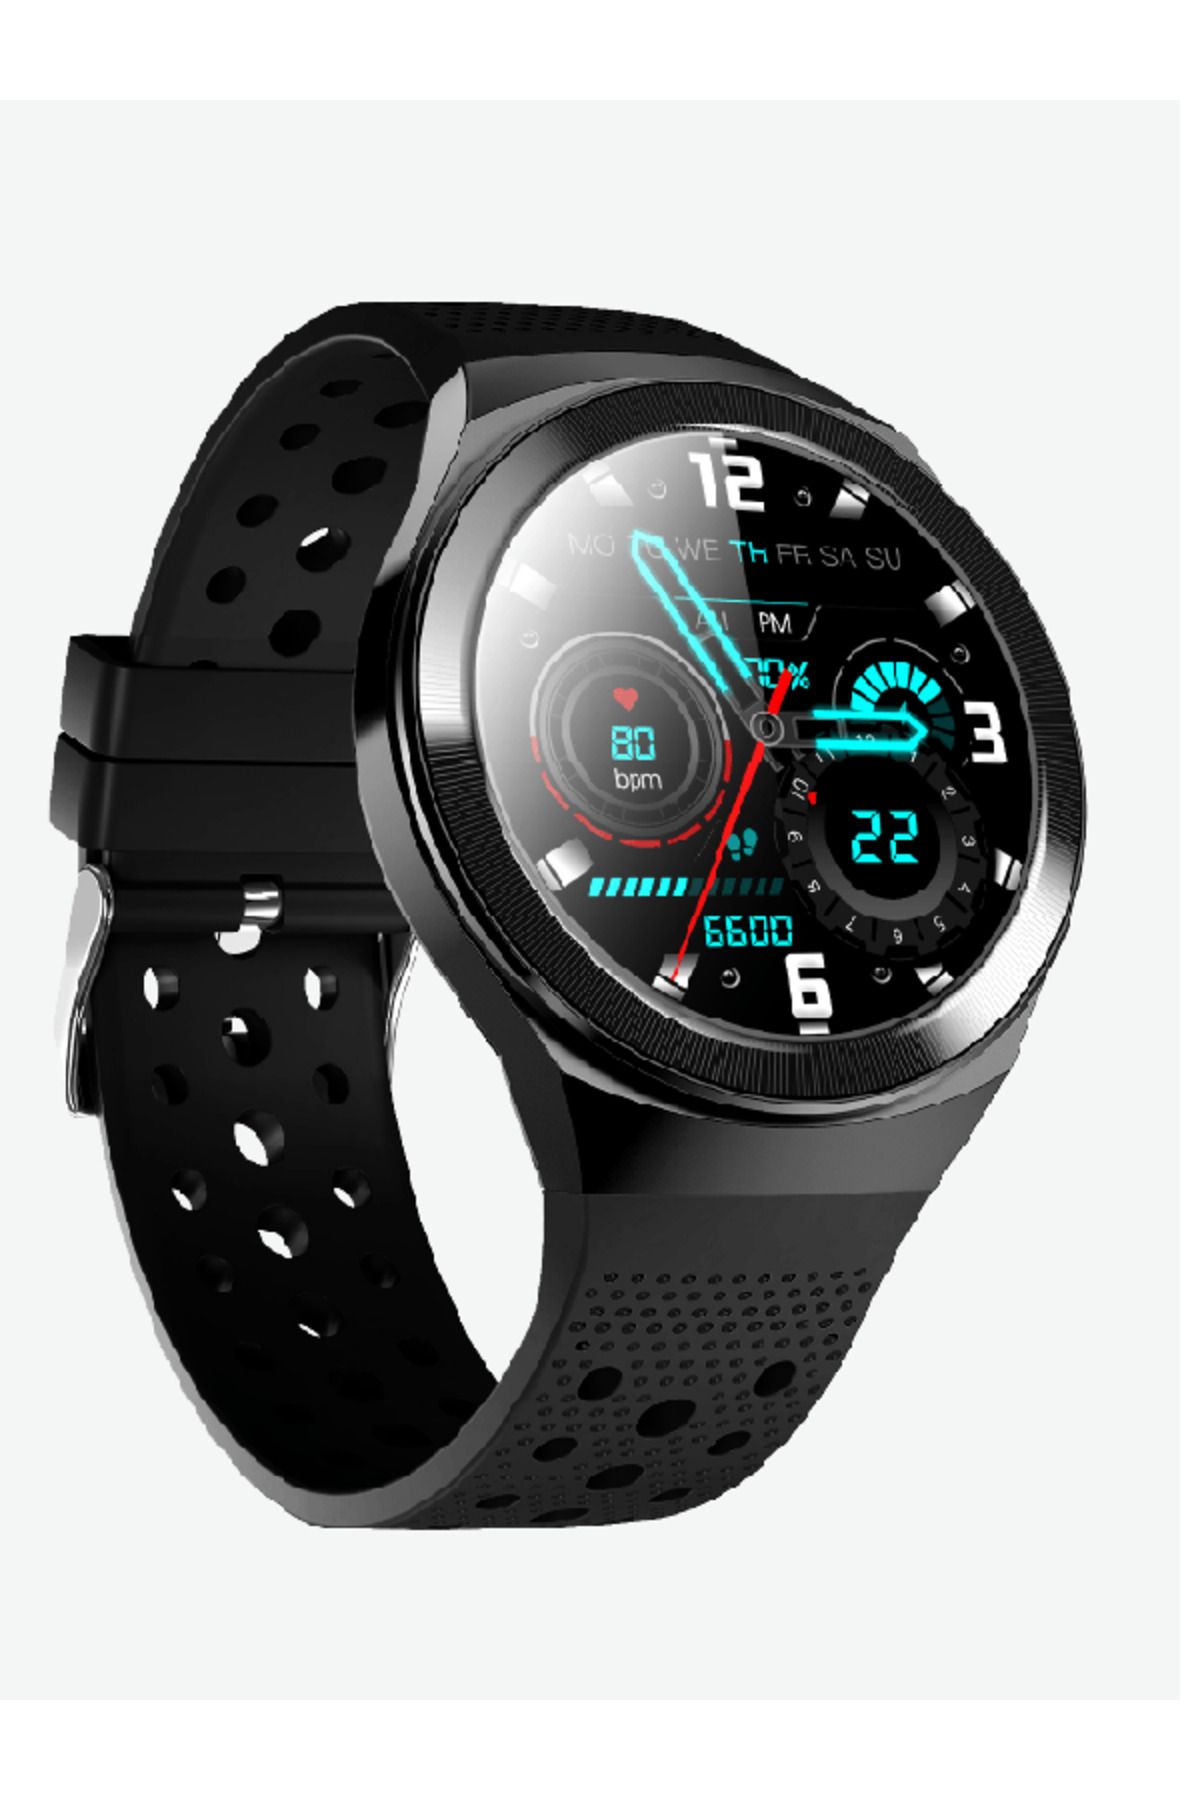 Linktech Kaliteli Akıllı Saat Ios ve Android Uyumlu Premium Smart Watch LT S88